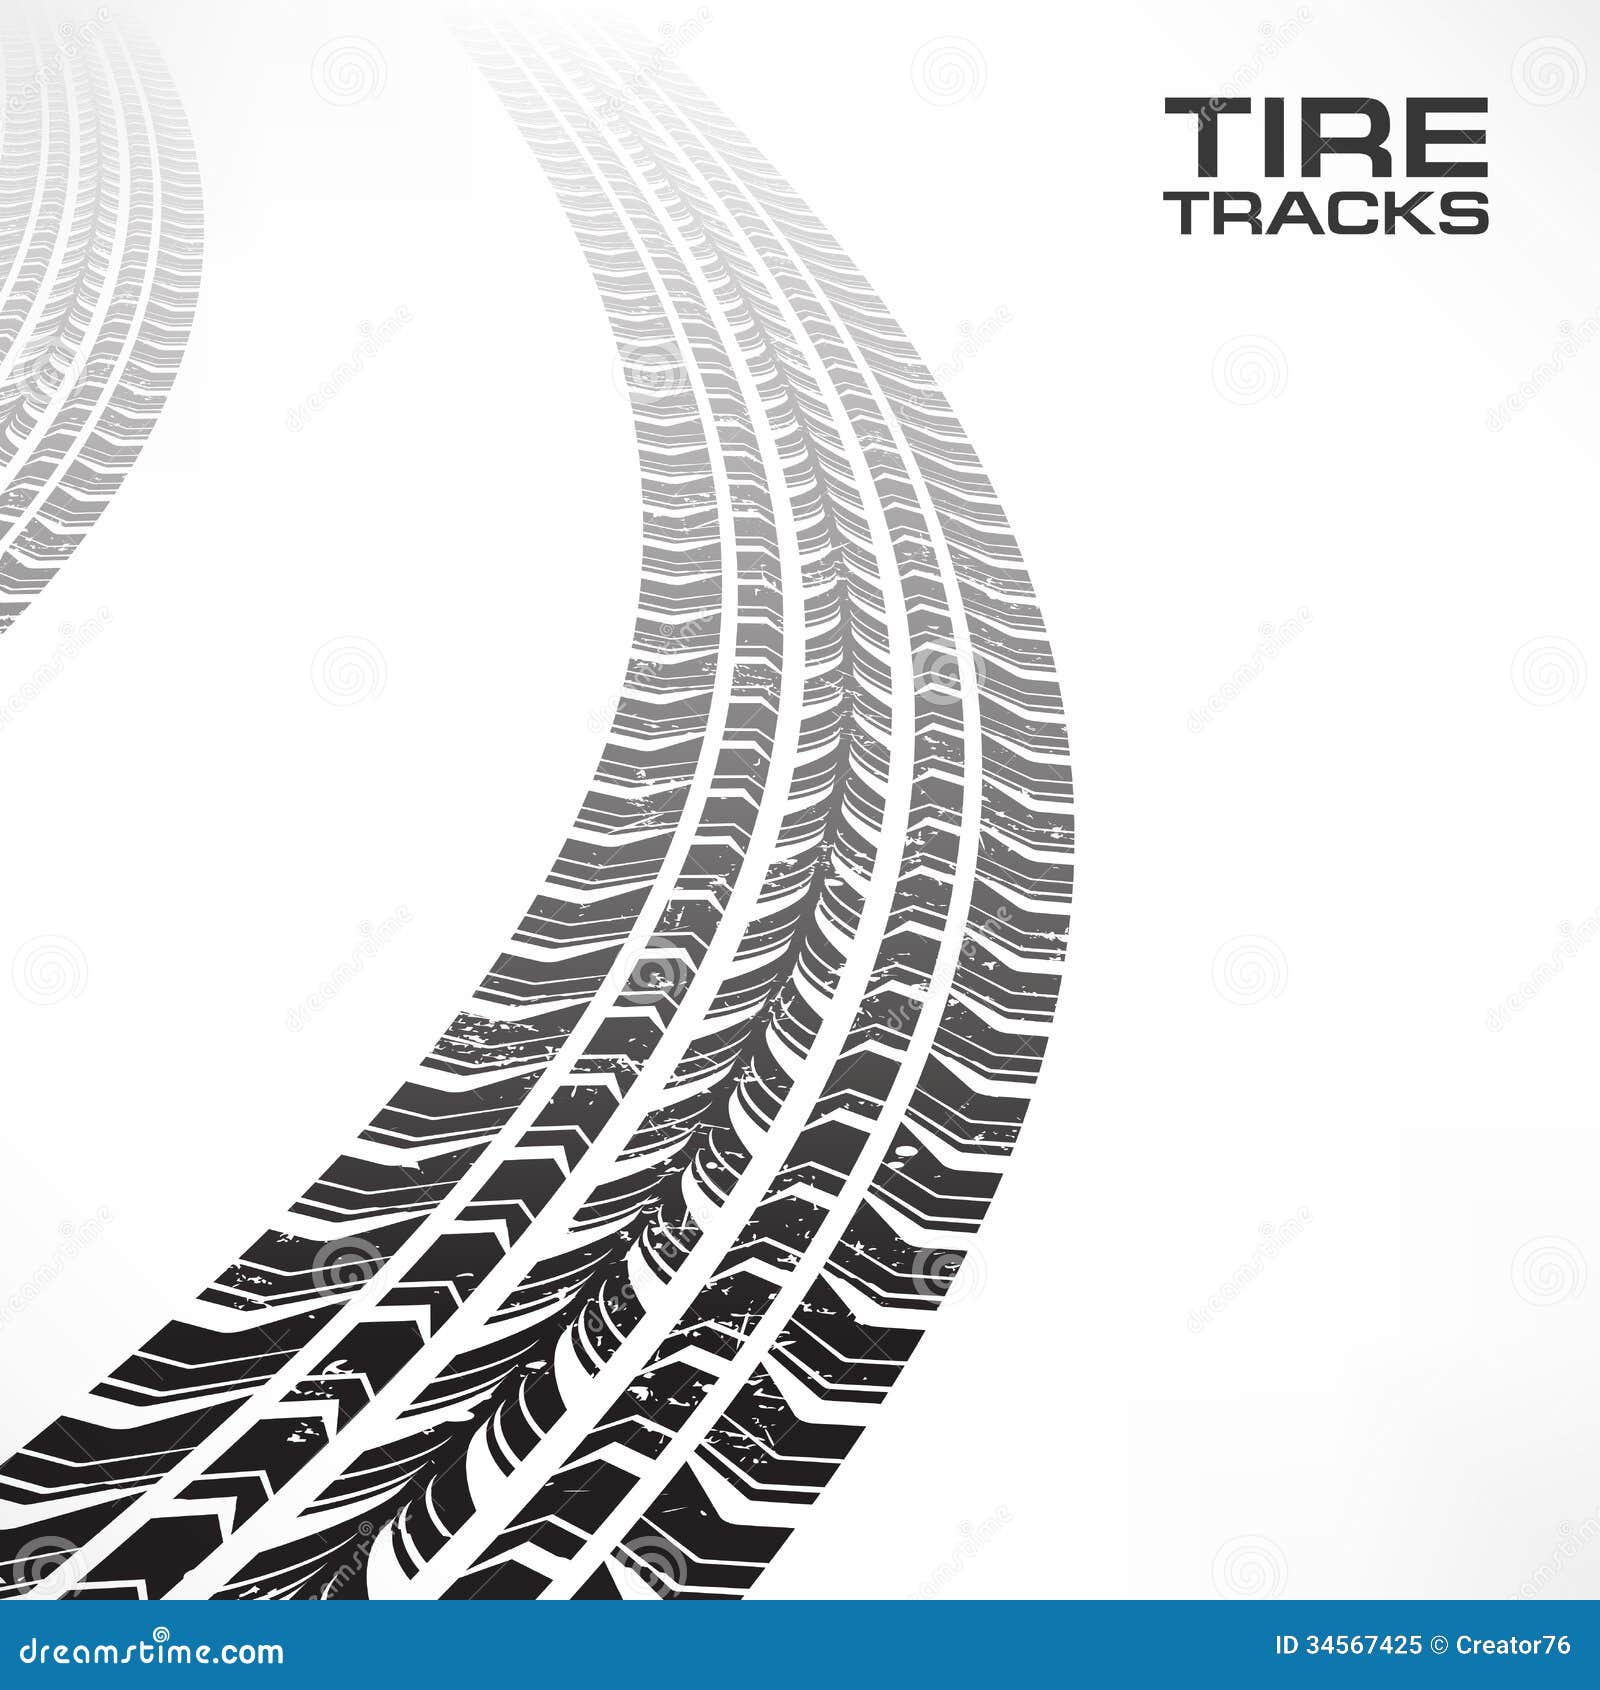 vector clipart tire tracks - photo #6